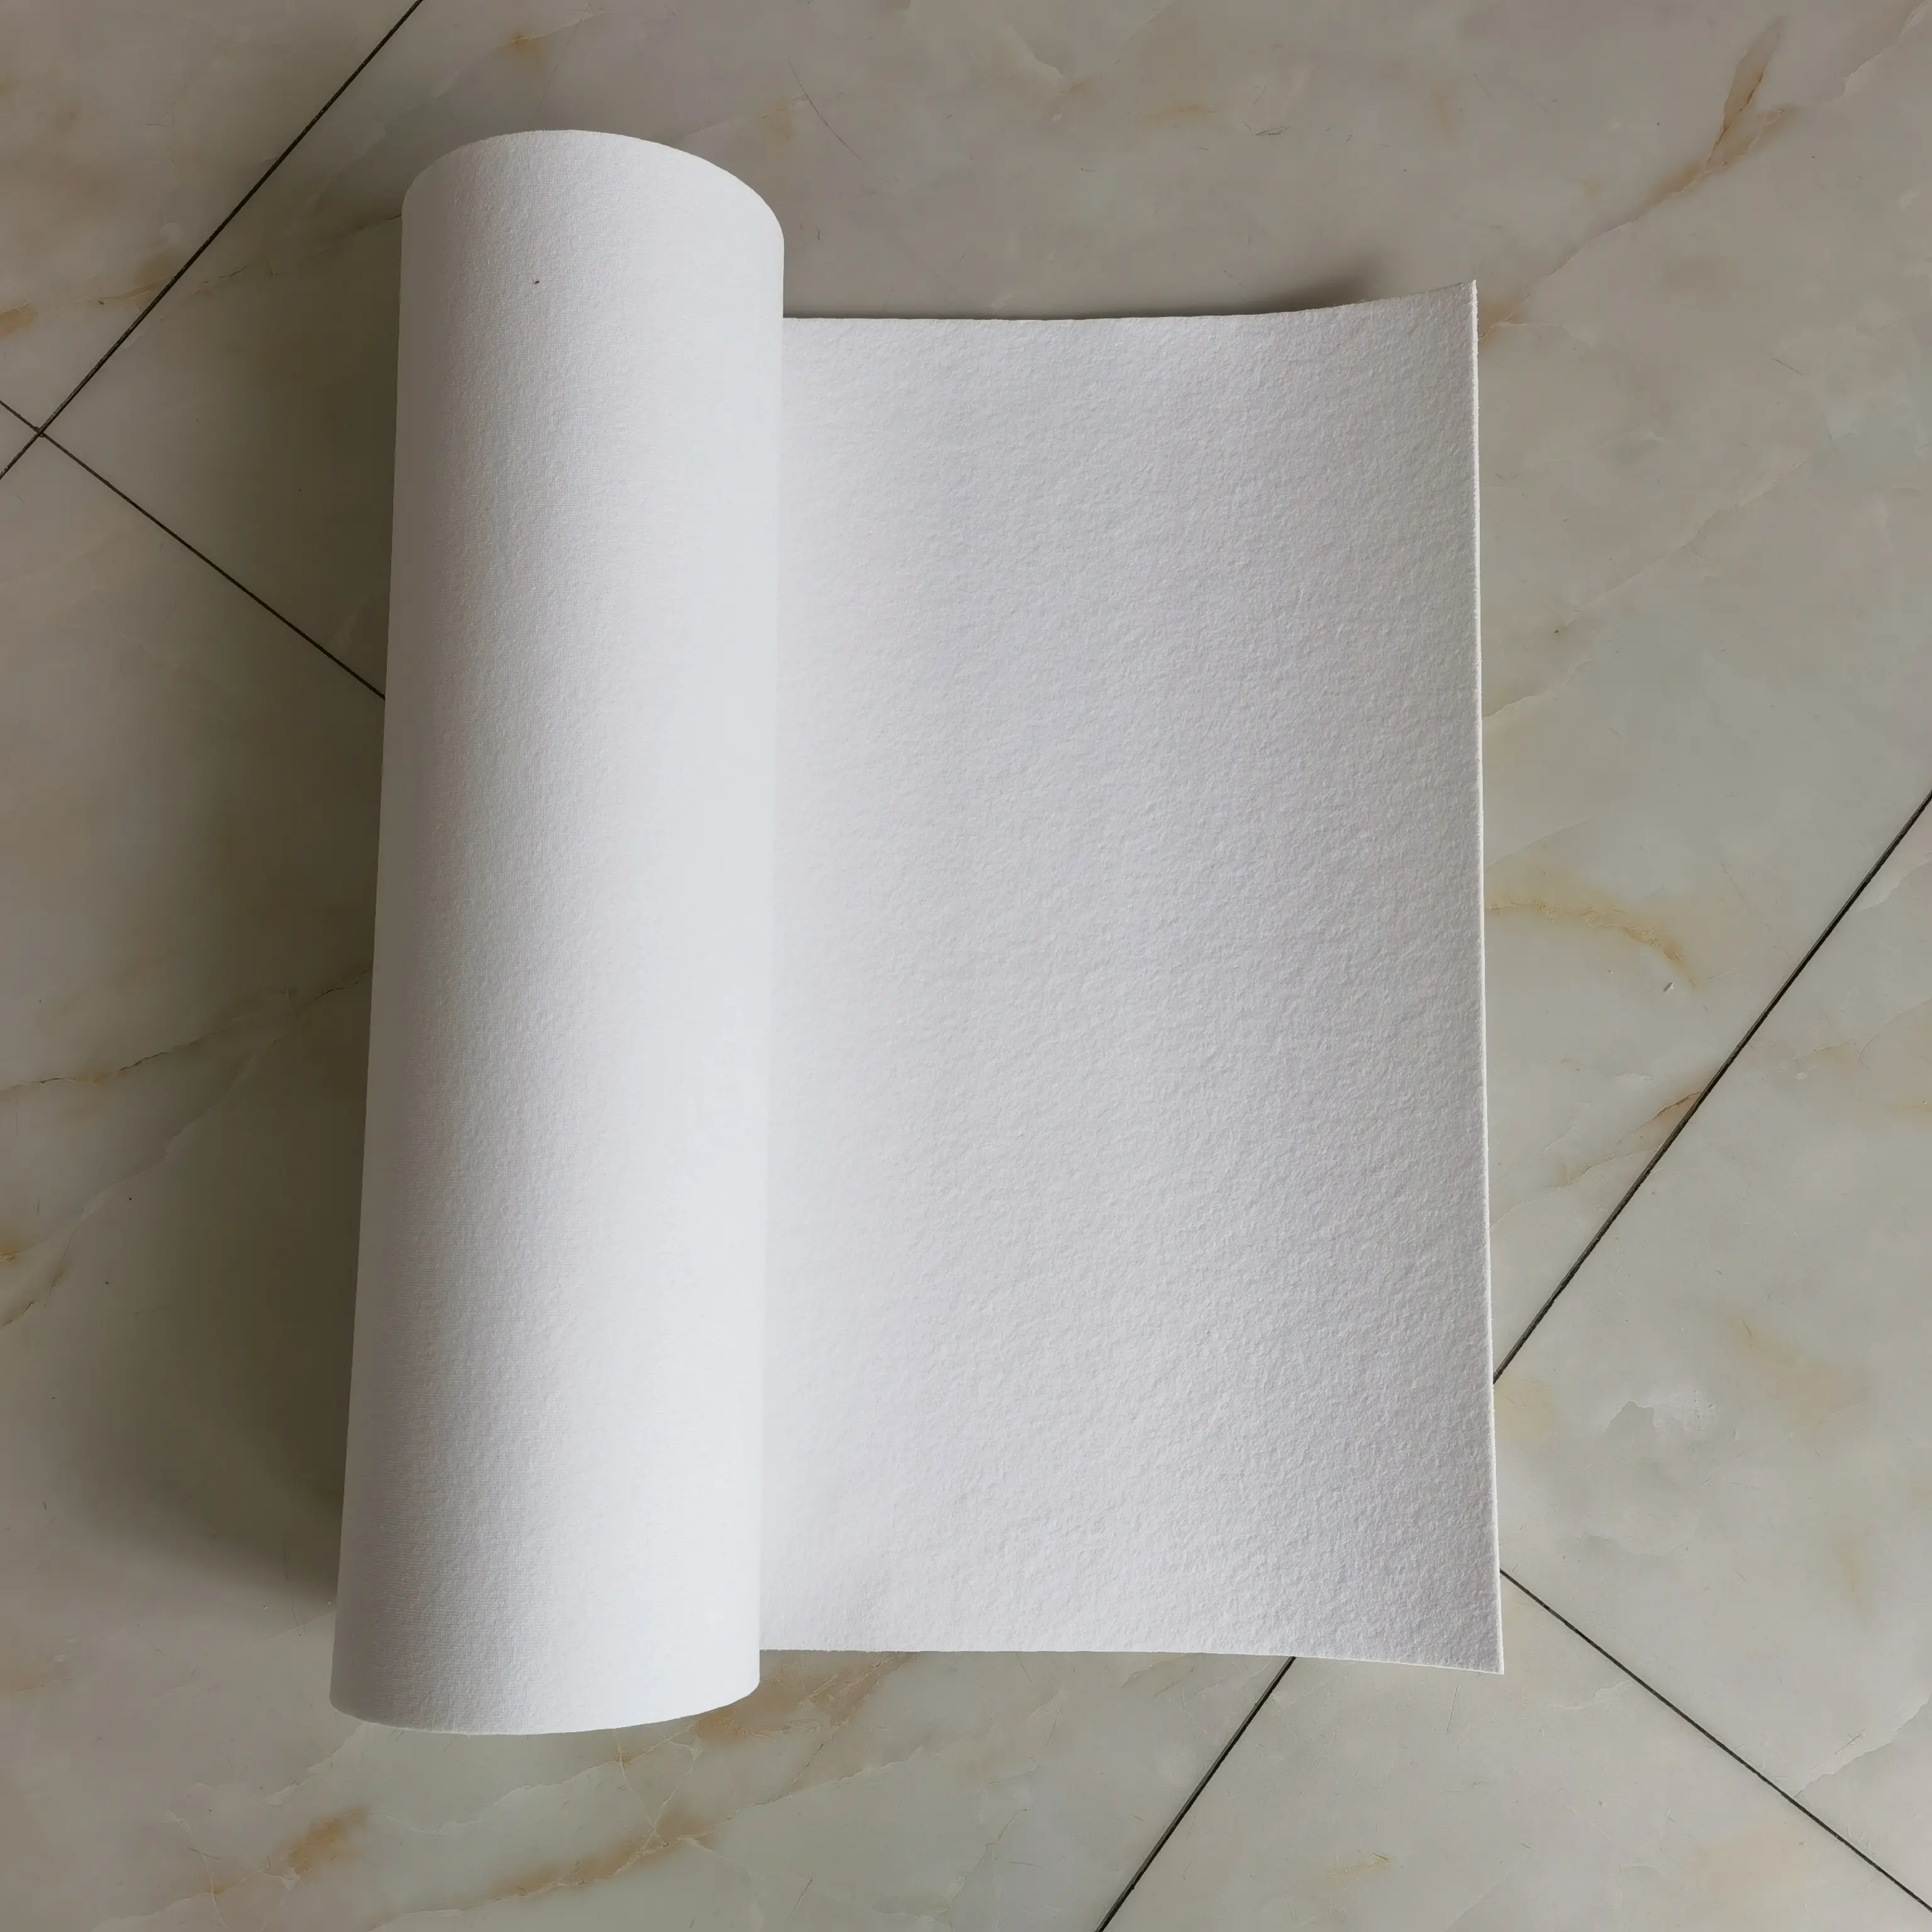 High Quality Heat Resistant Ceramic Fiber Fire Insulation Board Ceramic Fiber Board Ceramic Fiber paper